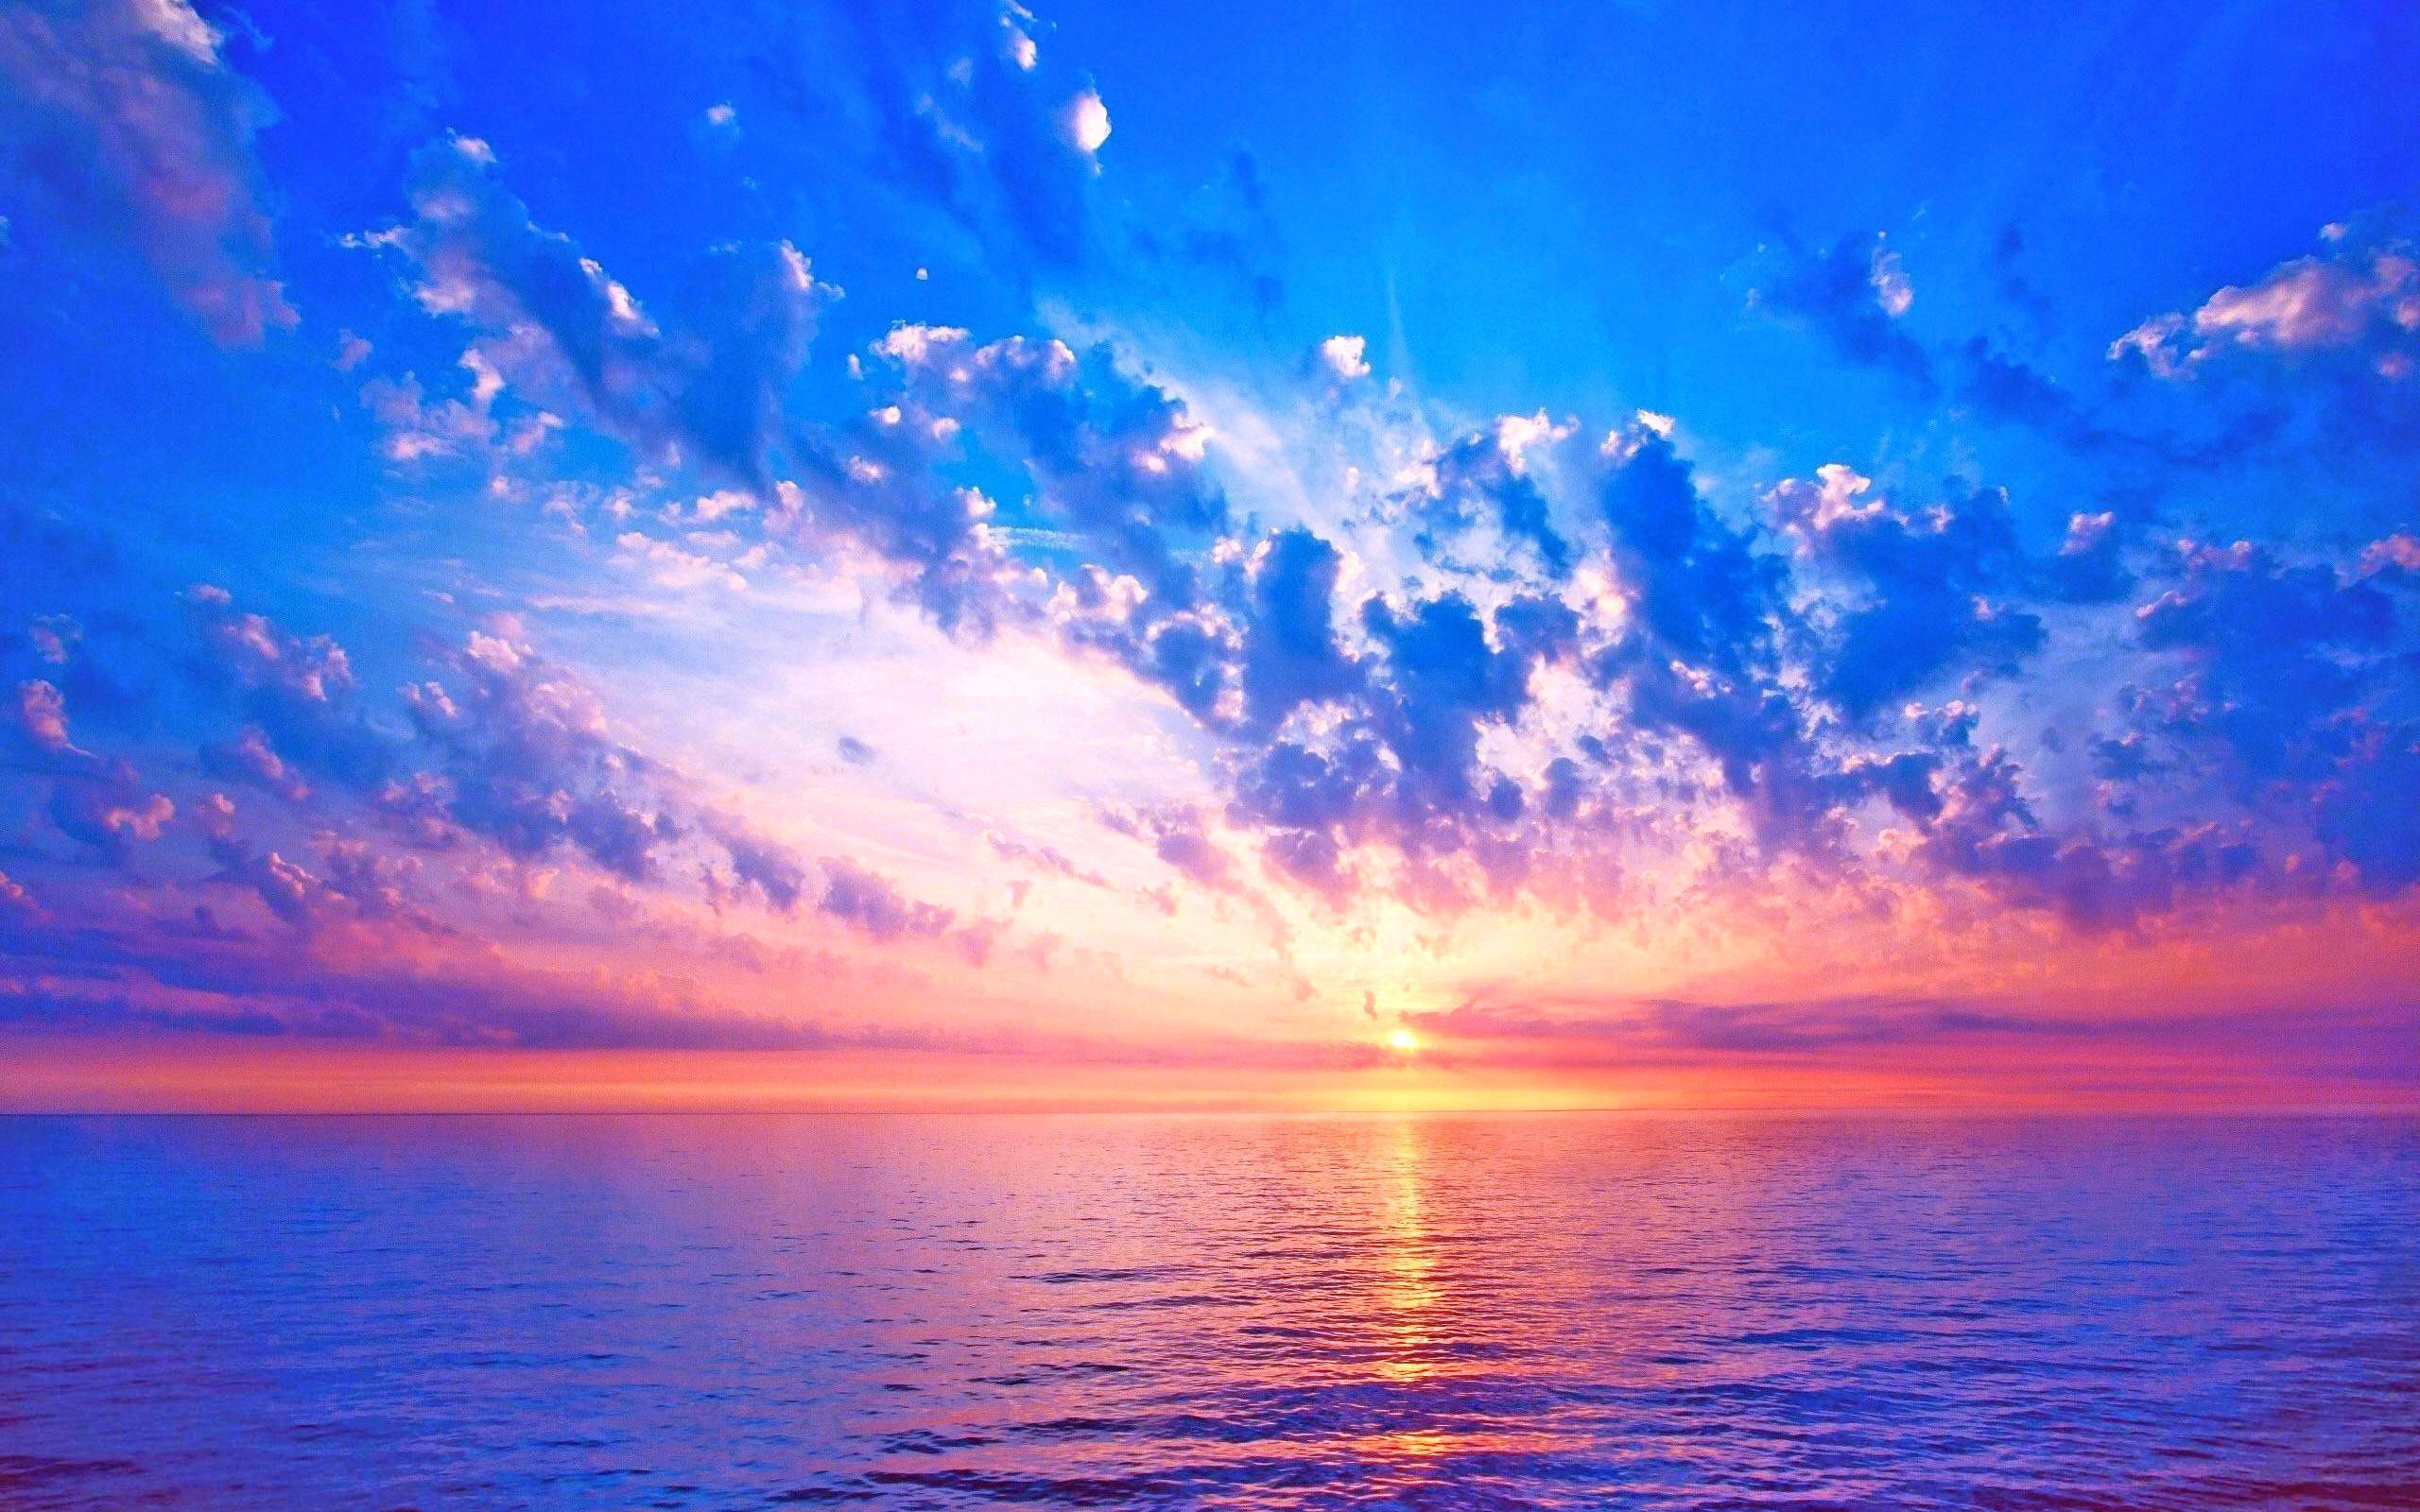 beach sunset image dekstop best HD wallp. Sunrise picture, Sunrise wallpaper, Blue sky wallpaper